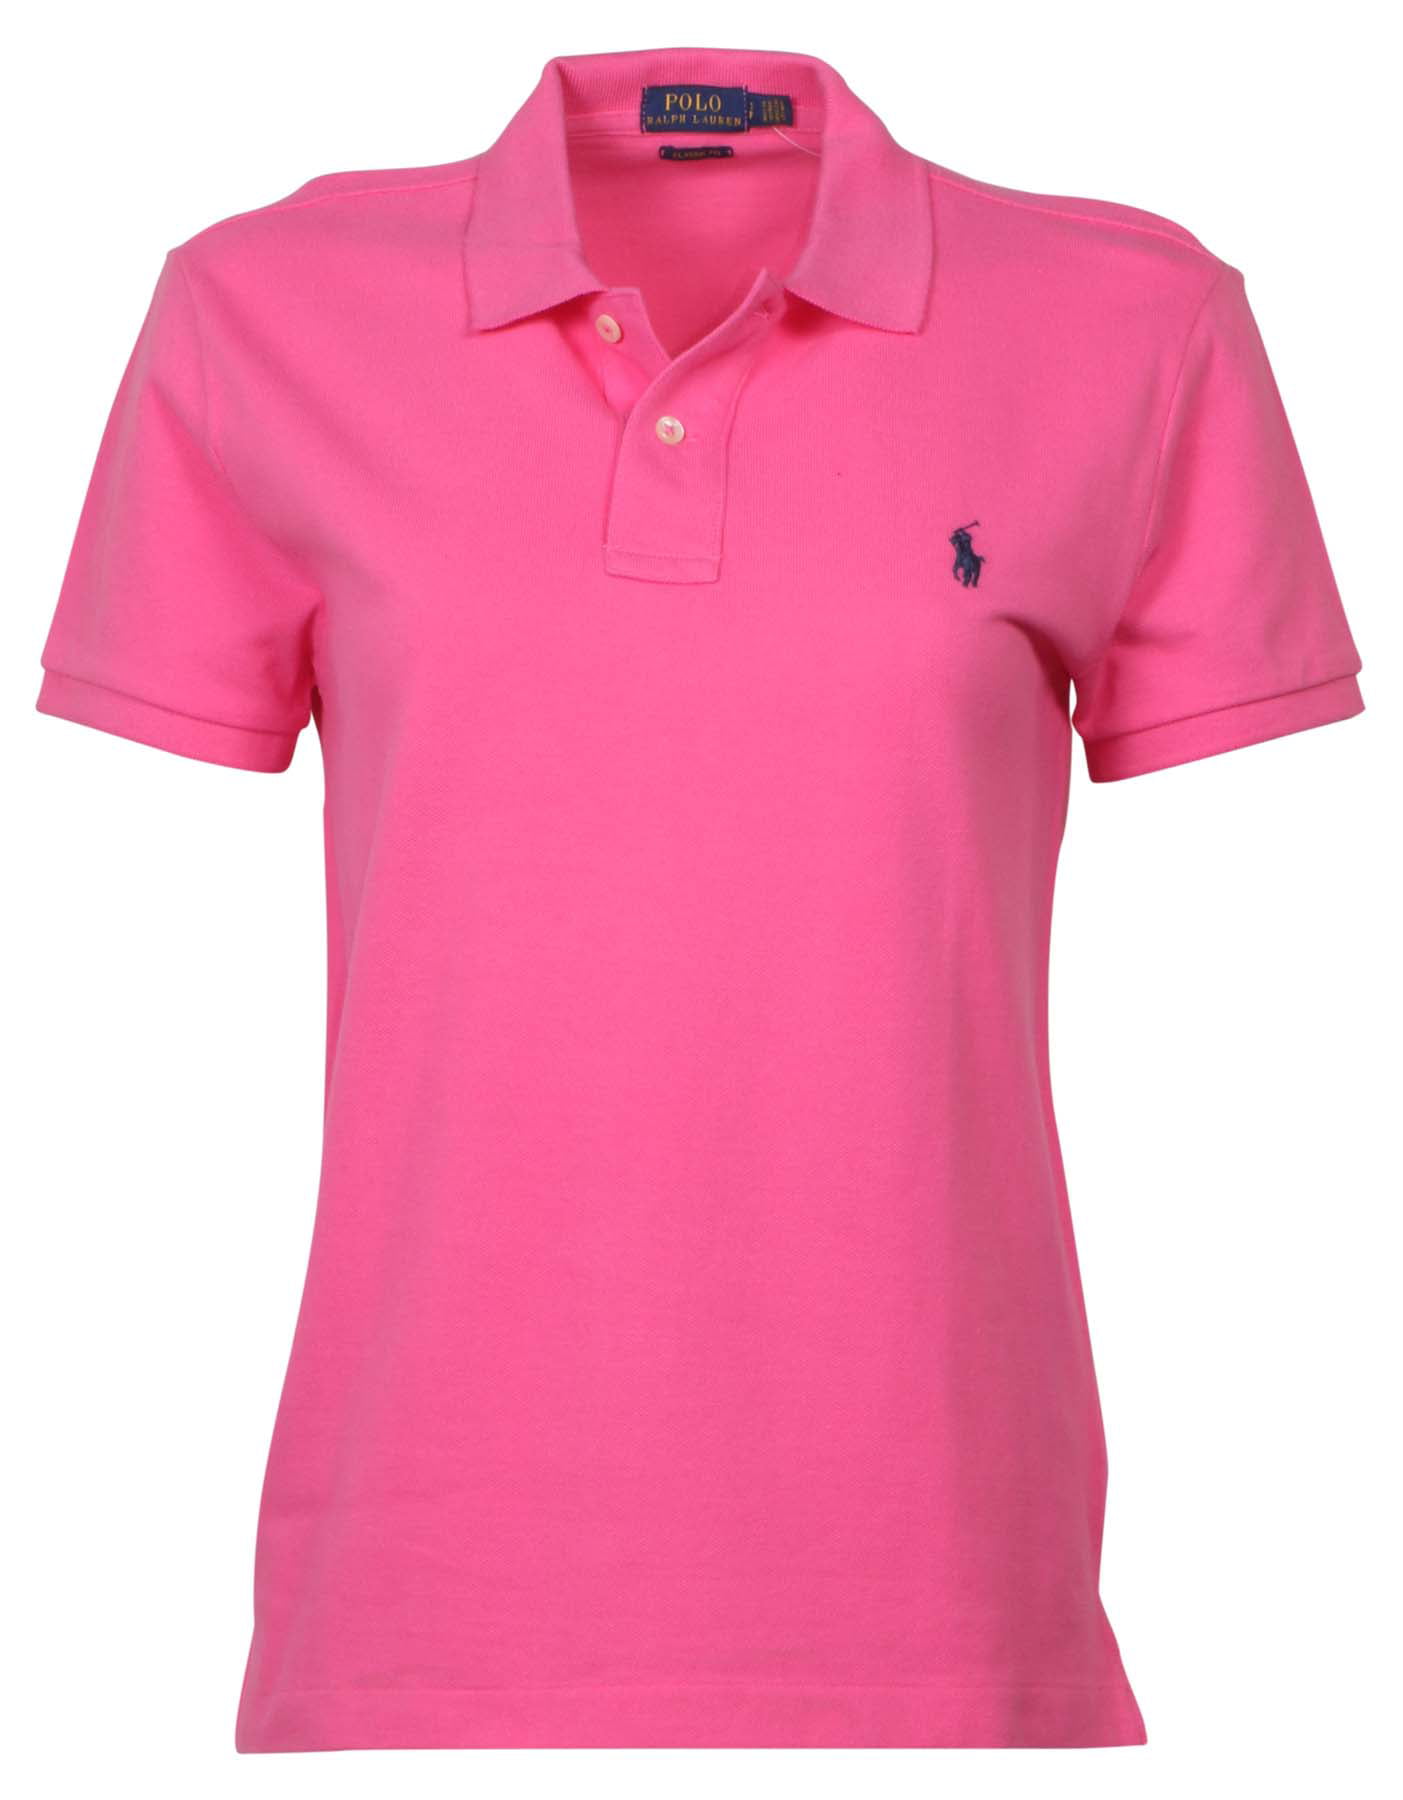 Polo RL Women's Classic Fit Mesh Pony Shirt (Pink, X-Large) - Walmart.com